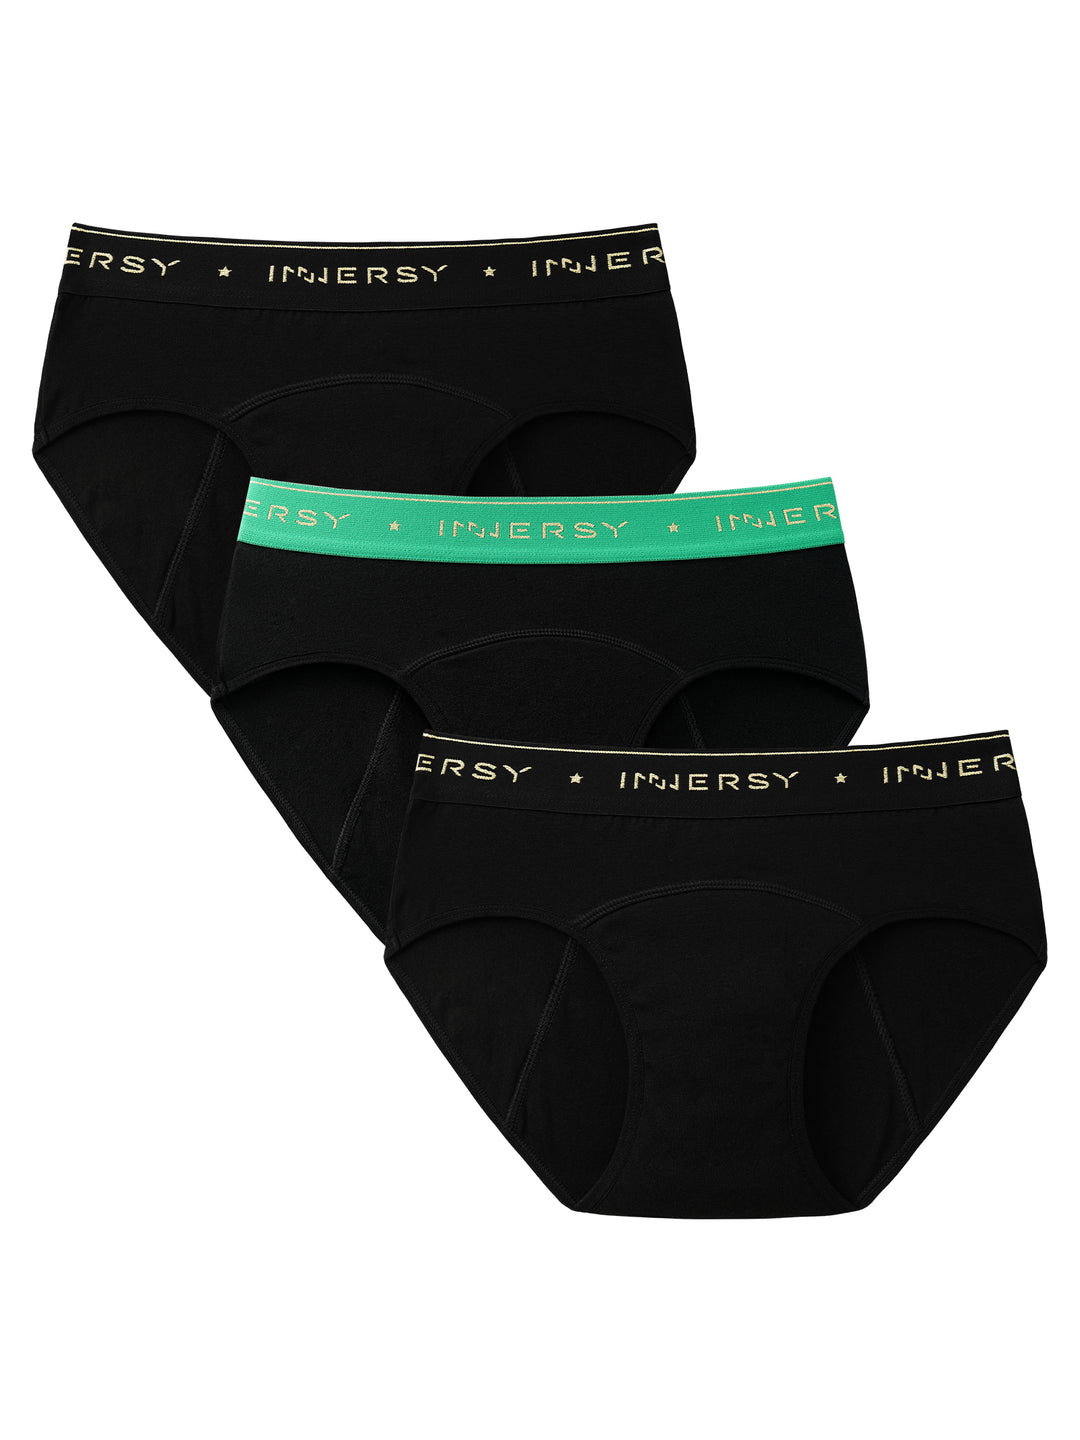 Kiench Teen's Period Panties Cotton Big Girls' Menstrual Underwear 6-Pack